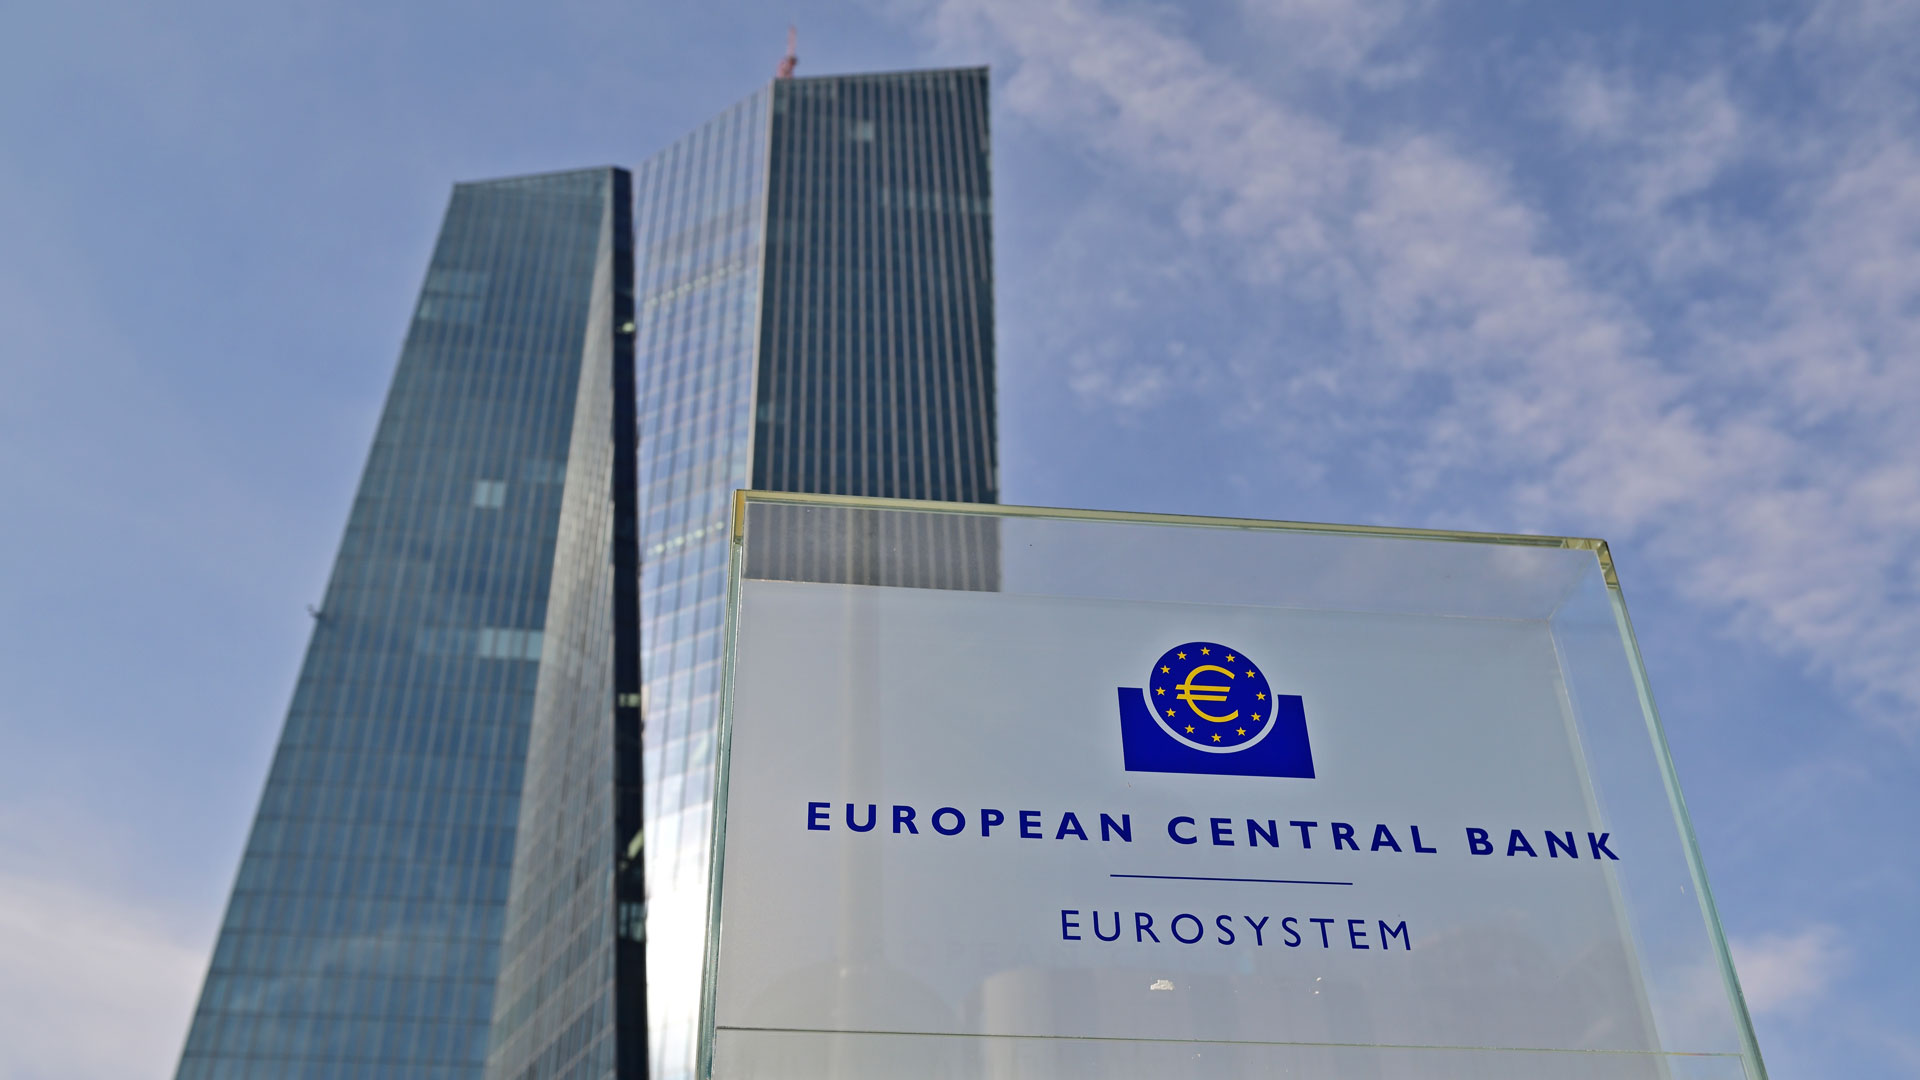 The European Central Bank (ECB) |  photo alliance / Daniel Kubirs